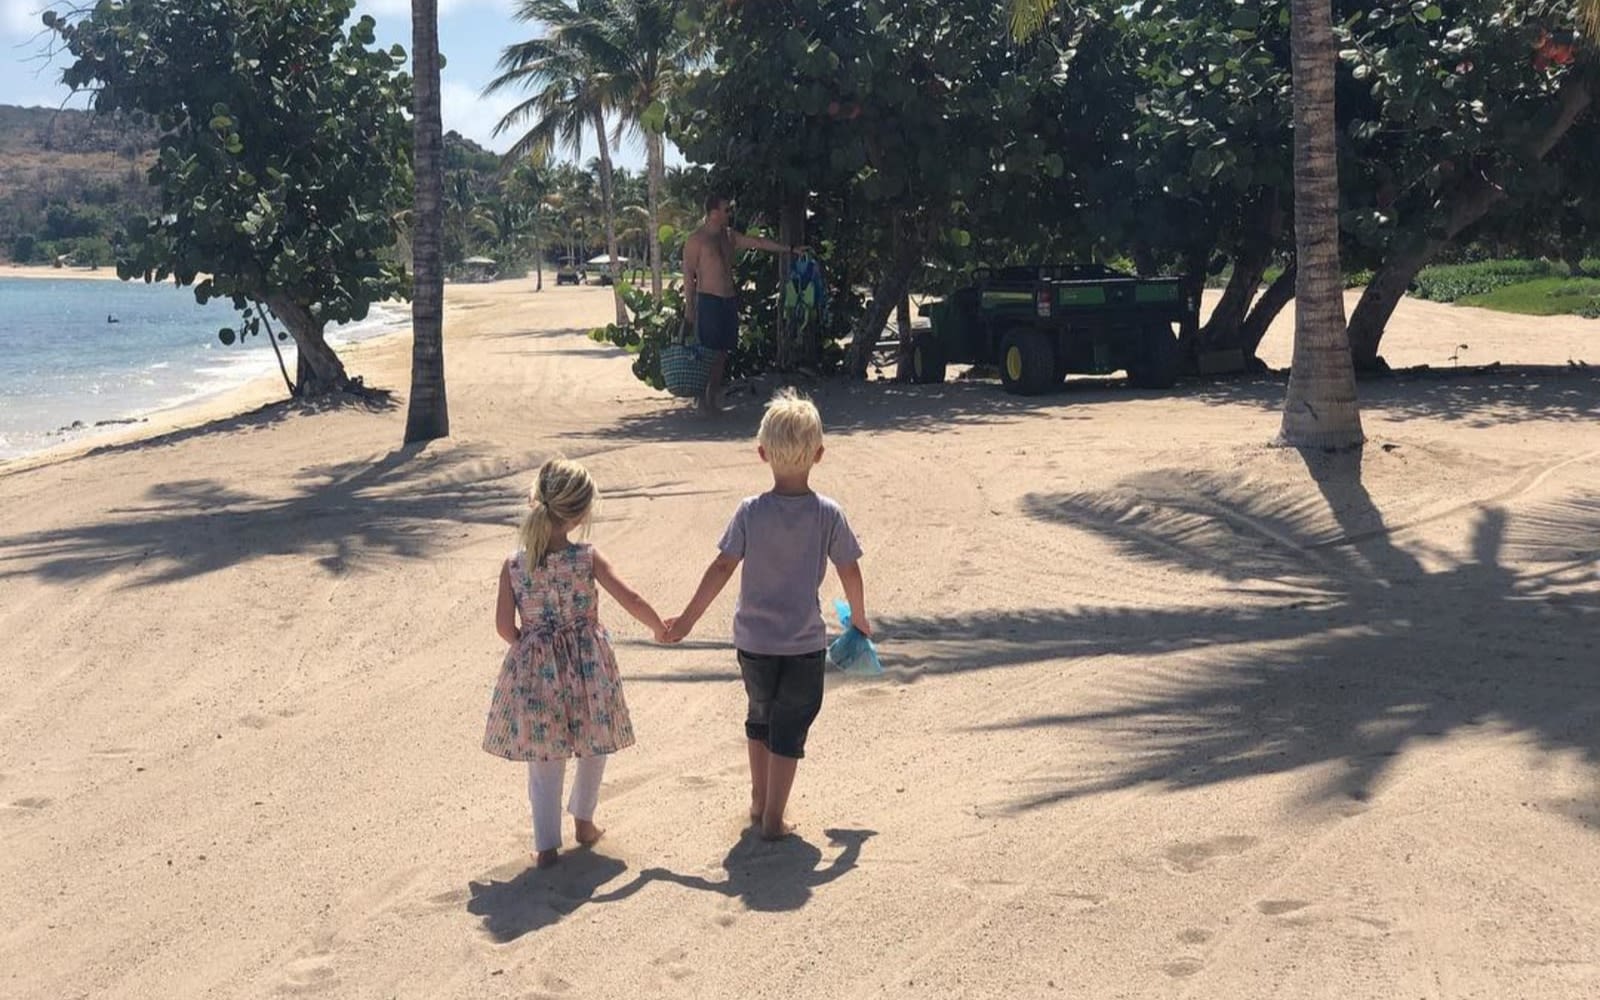 Etta and Artie walk together holding hands along a sandy beach